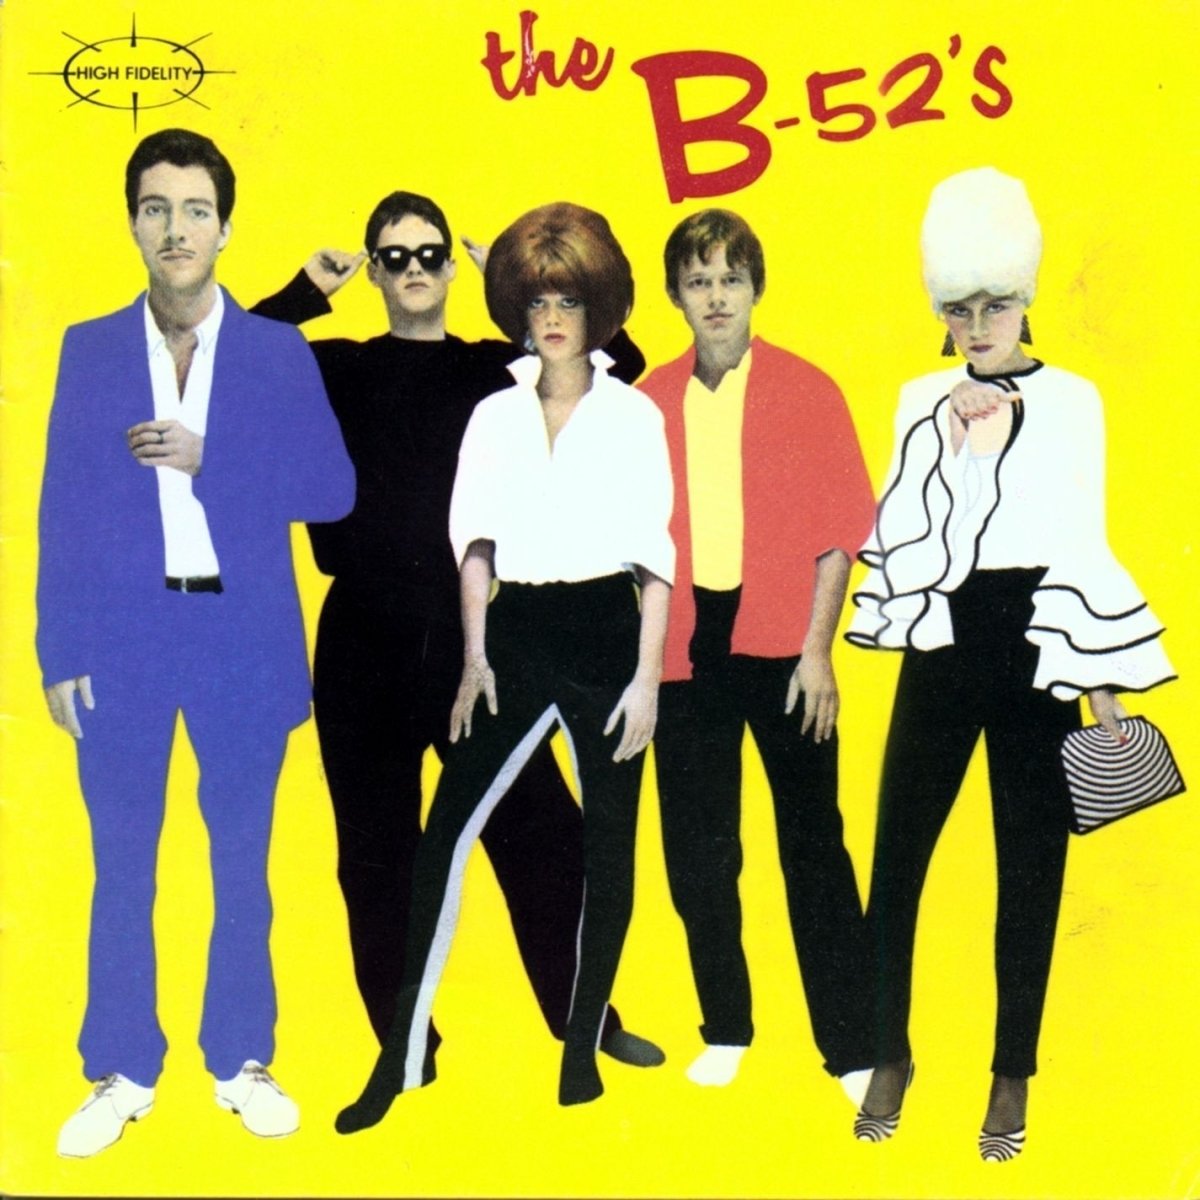 The B-52's - The B-52's Records & LPs Vinyl